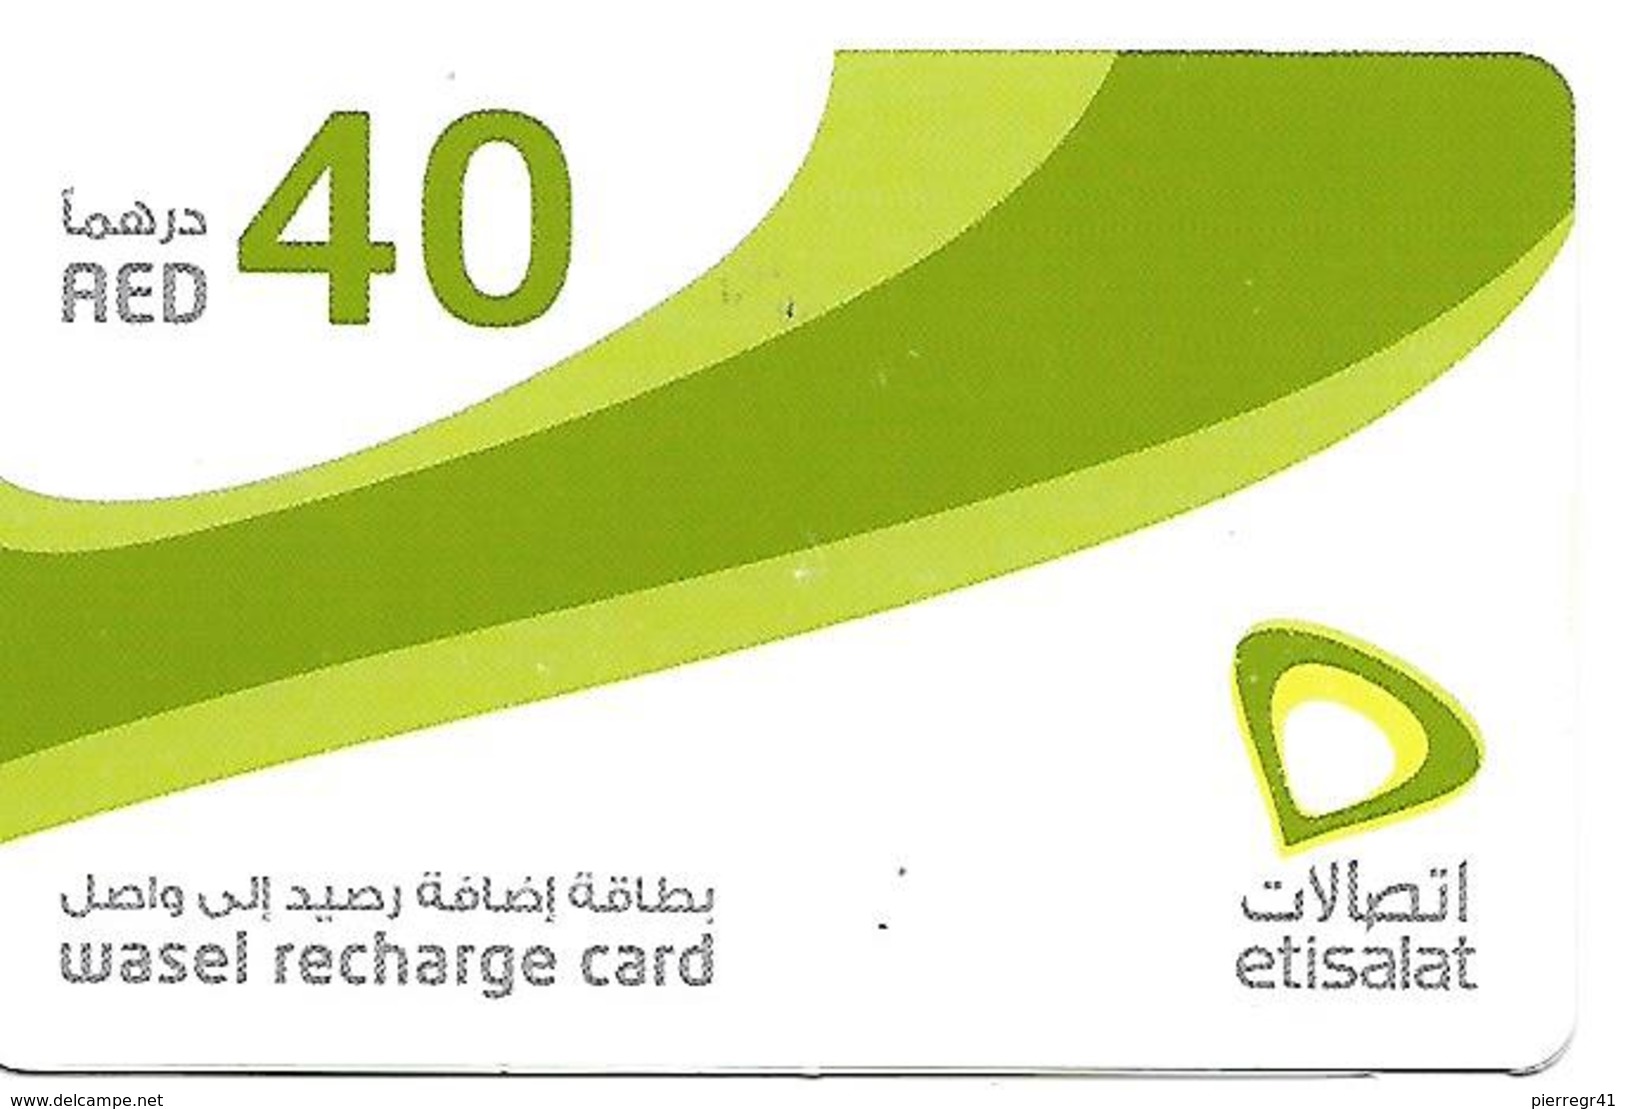 CARTE-PREPAYEE-ETISALAT-40-WASEL RECHARGE-Plastic Fin-TBE - Emirats Arabes Unis